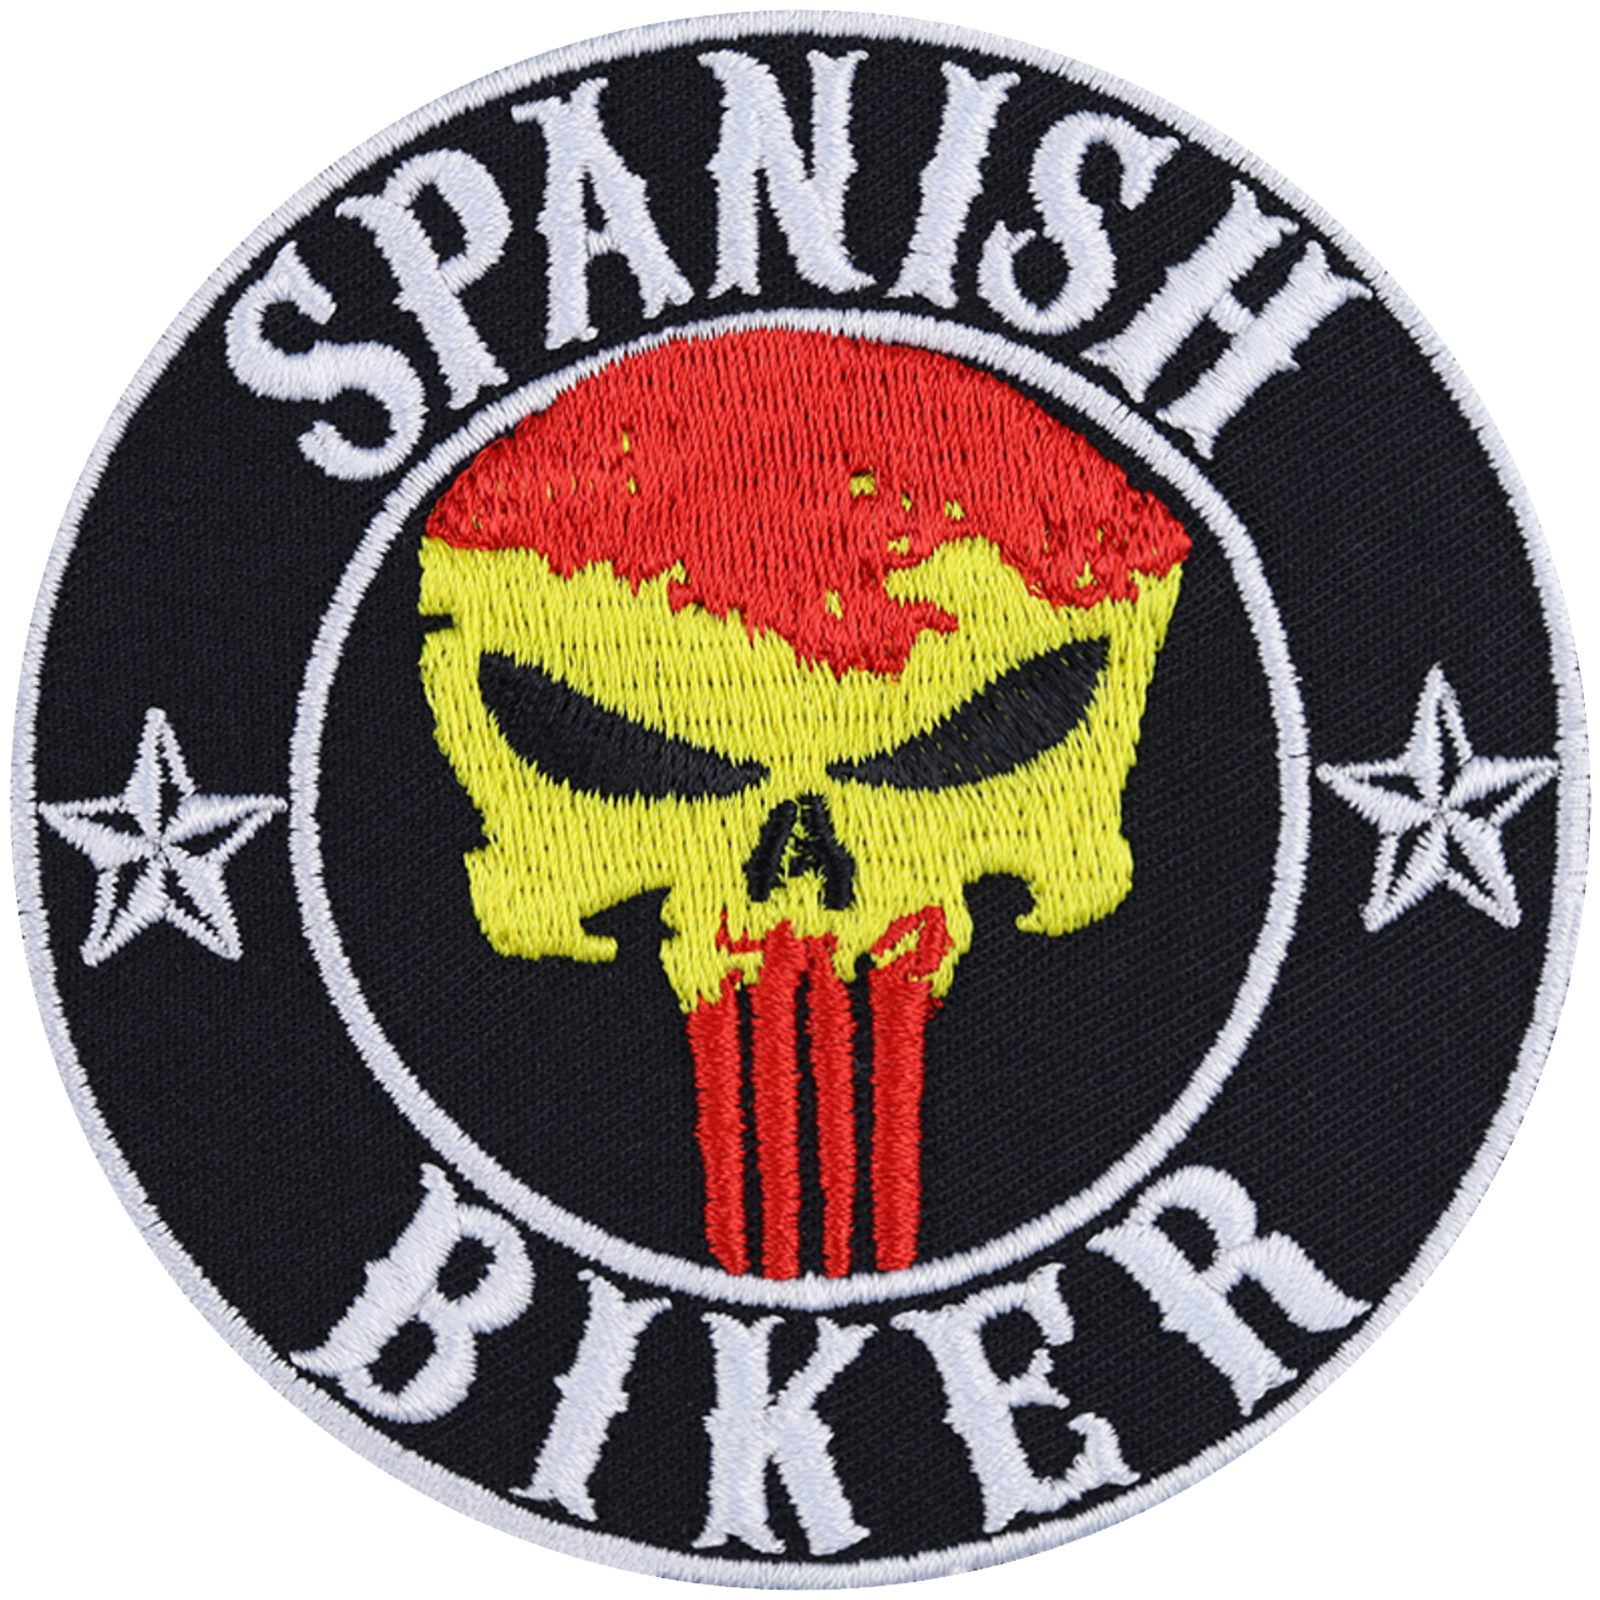 Spanish Biker - Patch